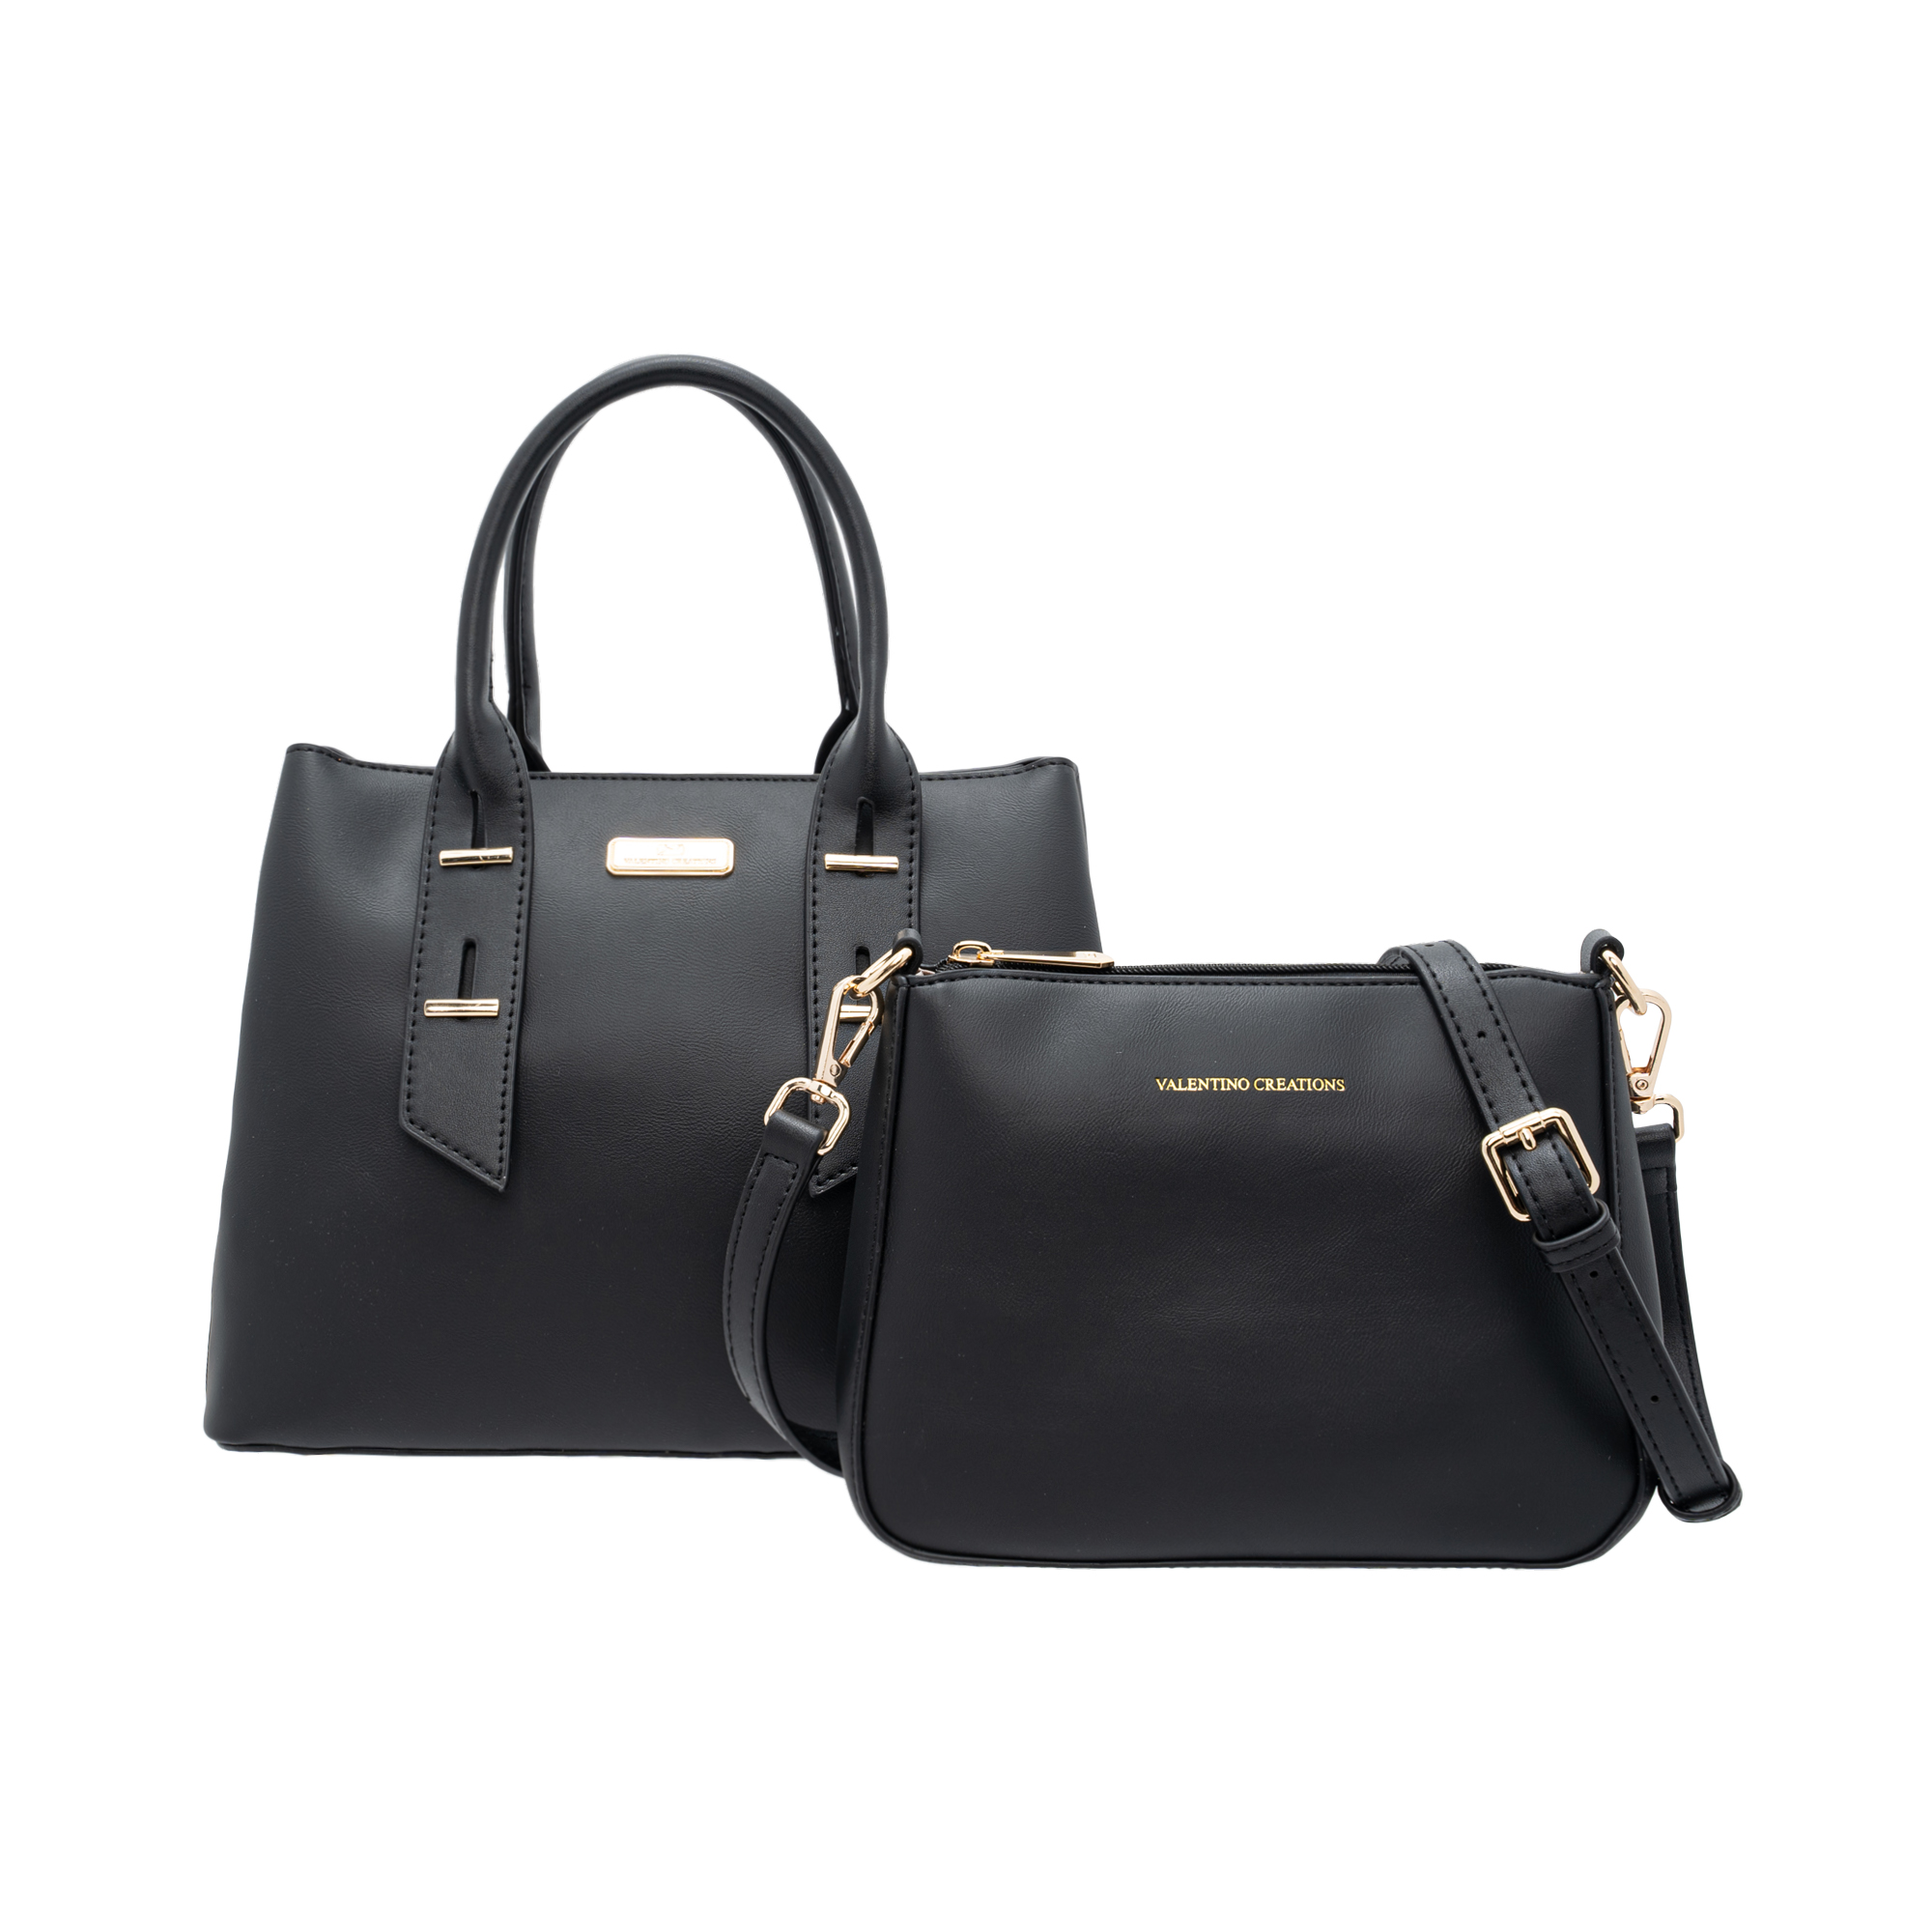 Valentino Creations Roxanne Handbag Sets British Polo